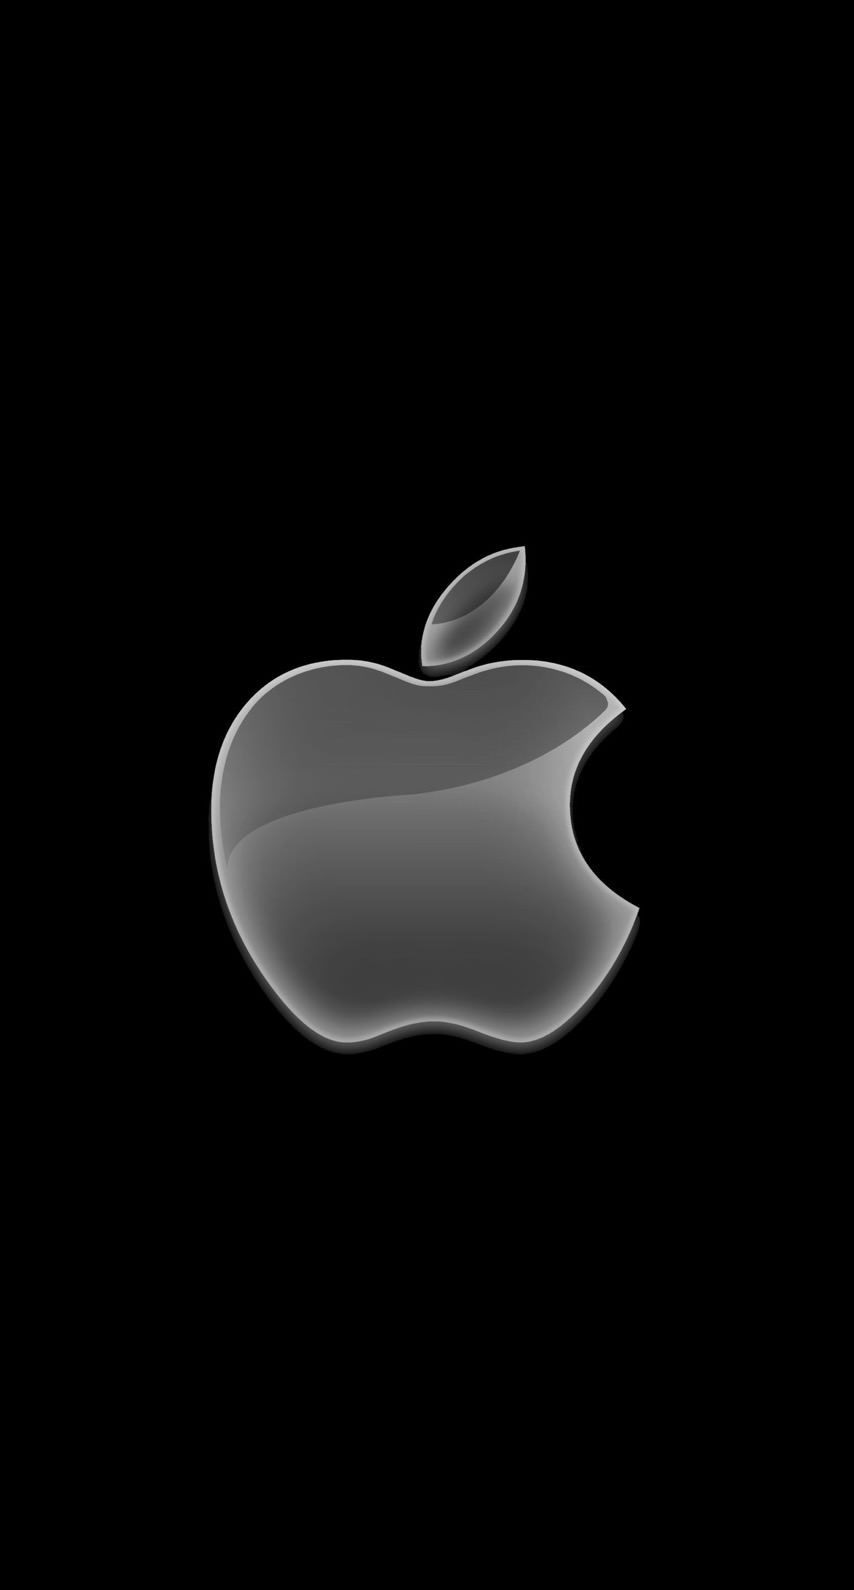 Apple logo black cool. wallpaper.sc iPhone6s. Apple logo wallpaper iphone, Apple logo wallpaper, Apple wallpaper iphone